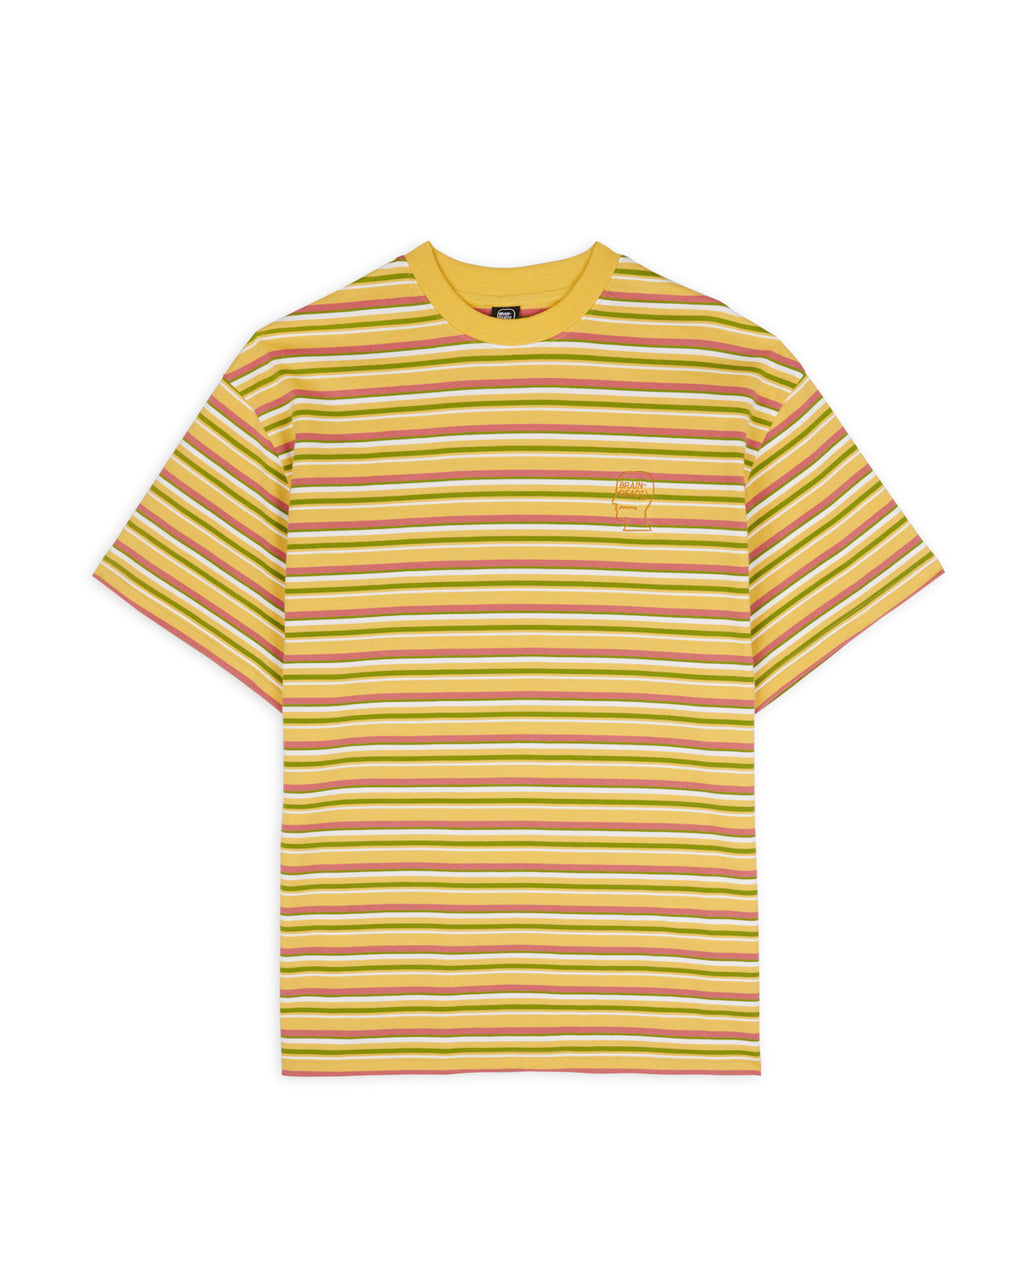 Nineties Blocked Striped T-Shirt - Mustard